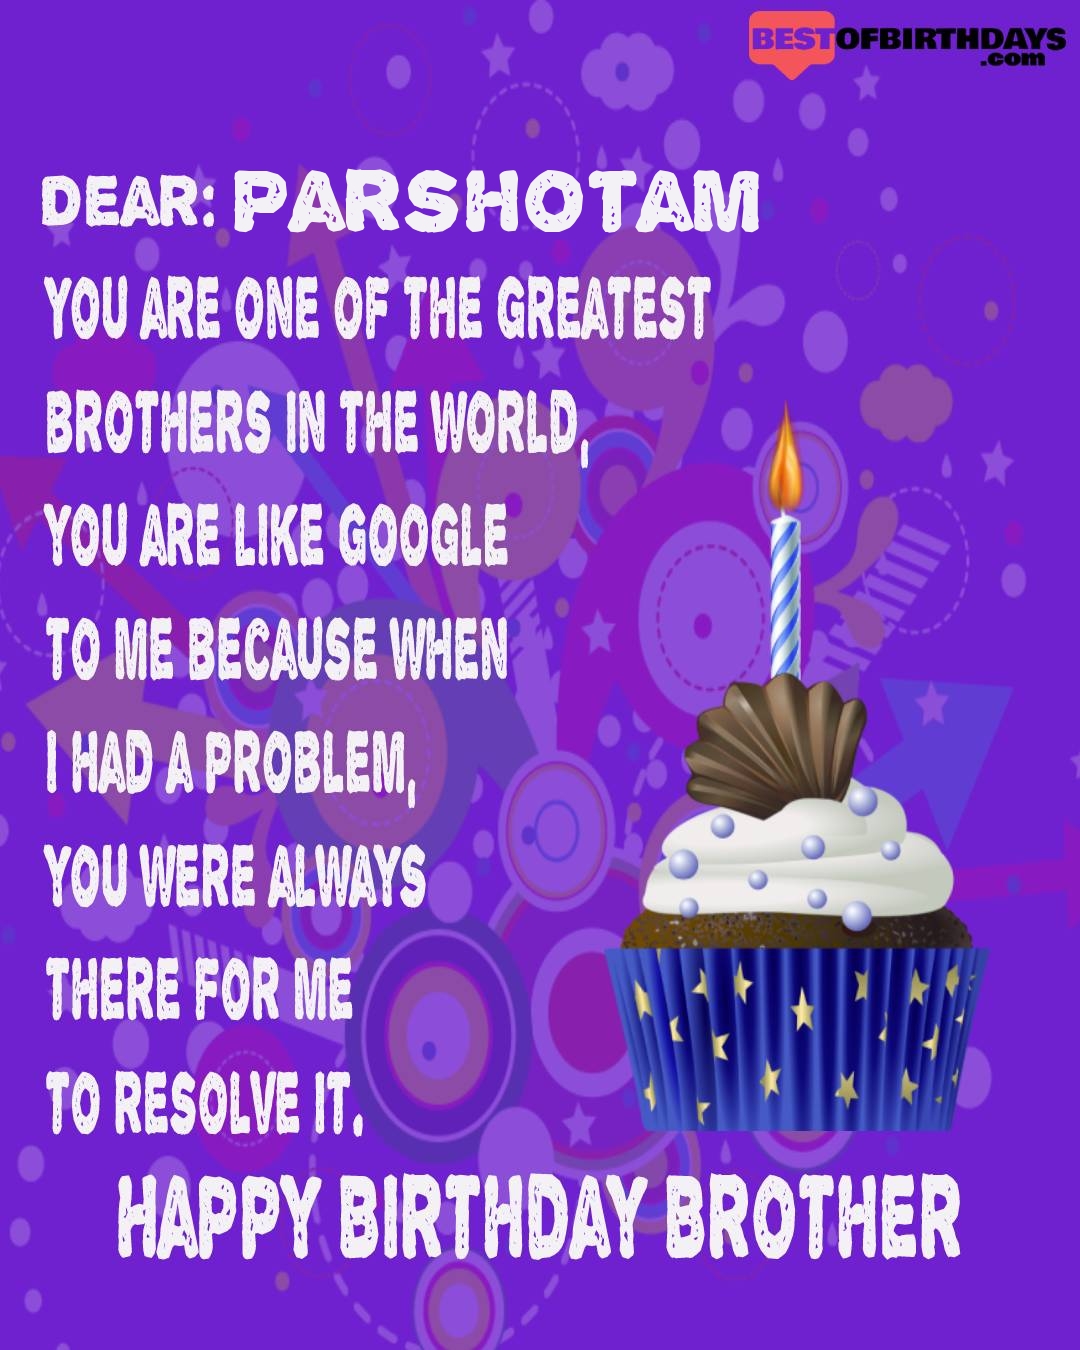 Happy birthday parshotam bhai brother bro